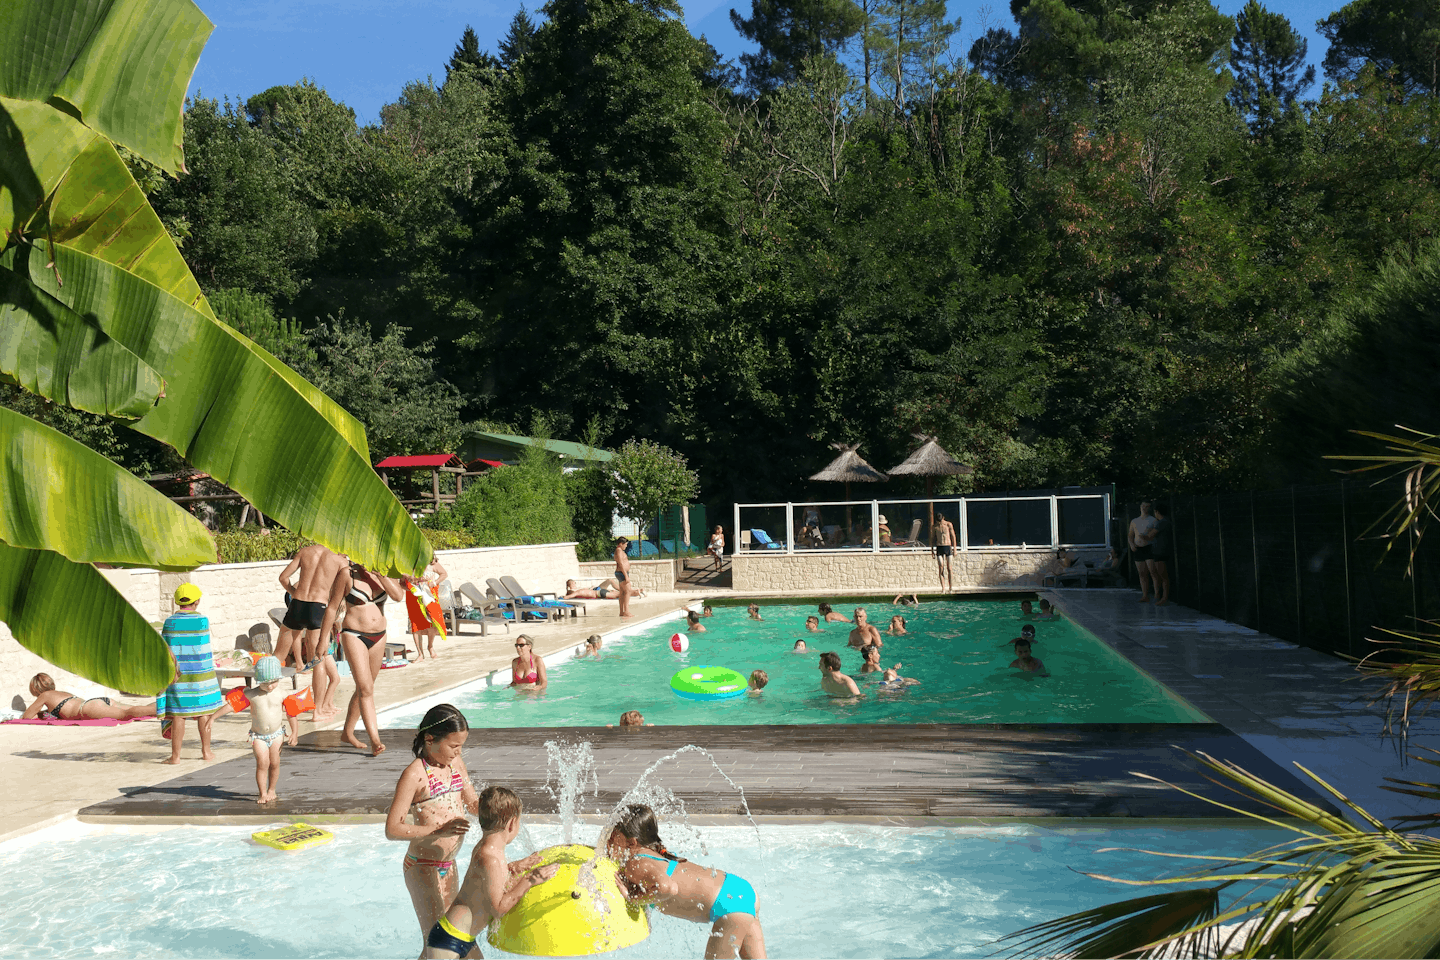 Camping Les Sources - Swimmingpool mit Badegästen